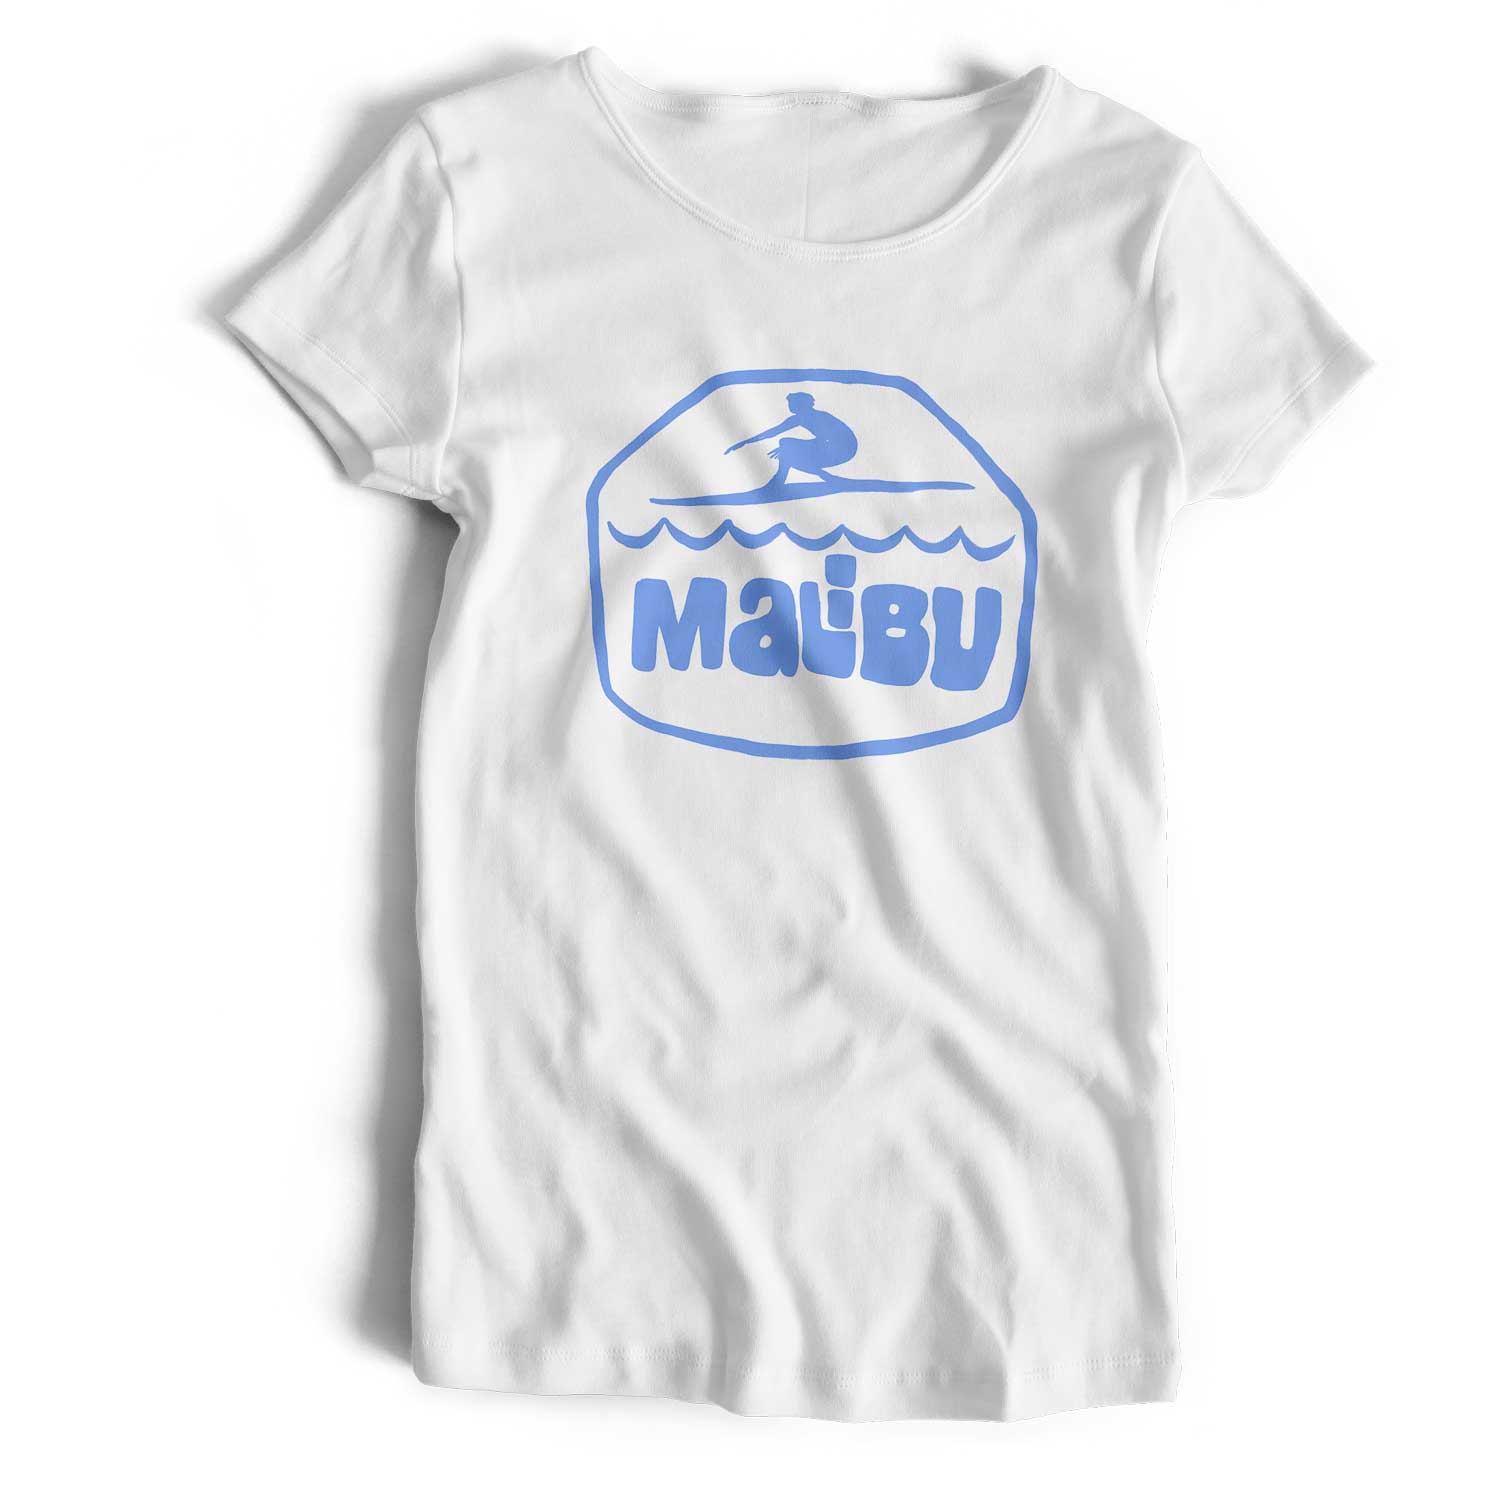 Malibu T Shirt - Surfing Classic As Worn By Carl Wilson